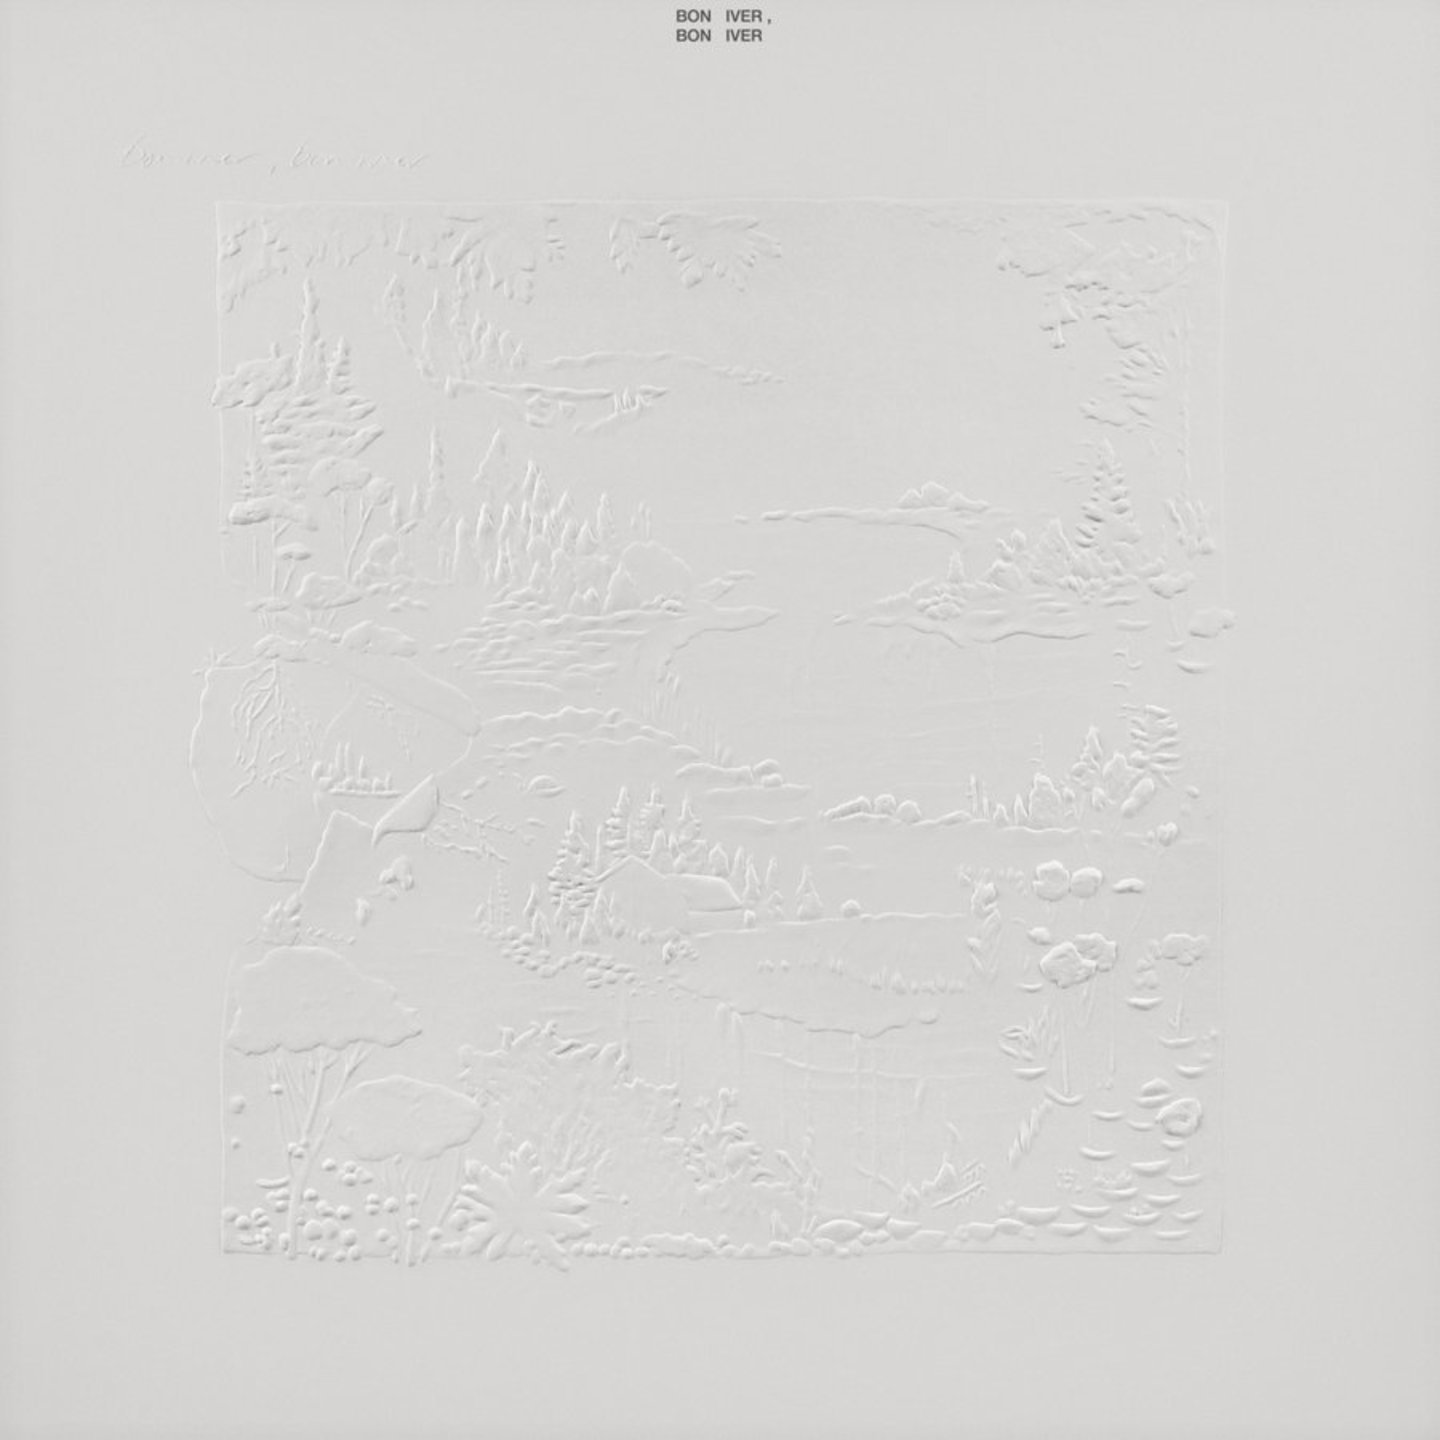 BON IVER - Bon Iver 2xLP 10th Anniversary White vinyl